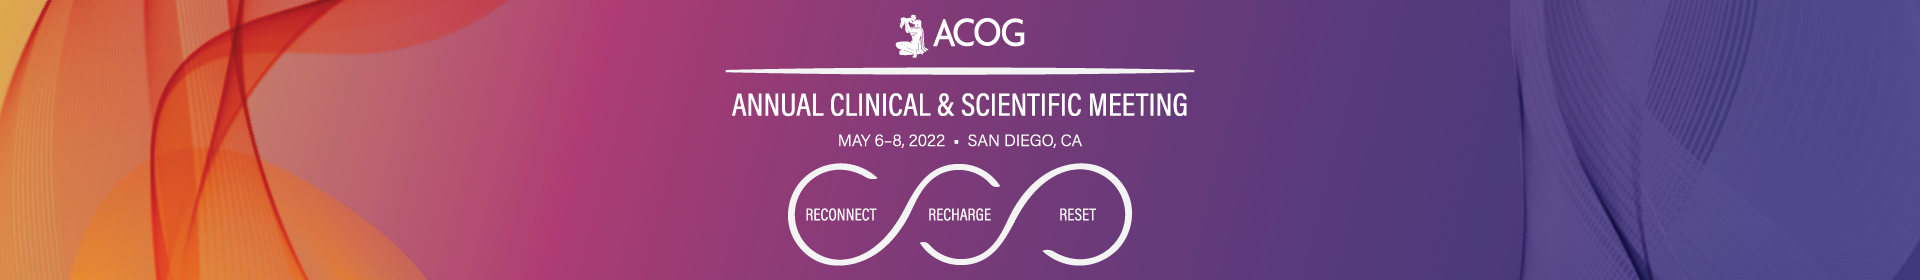 ACOG 2022 Annual Clinical & Scientific Meeting